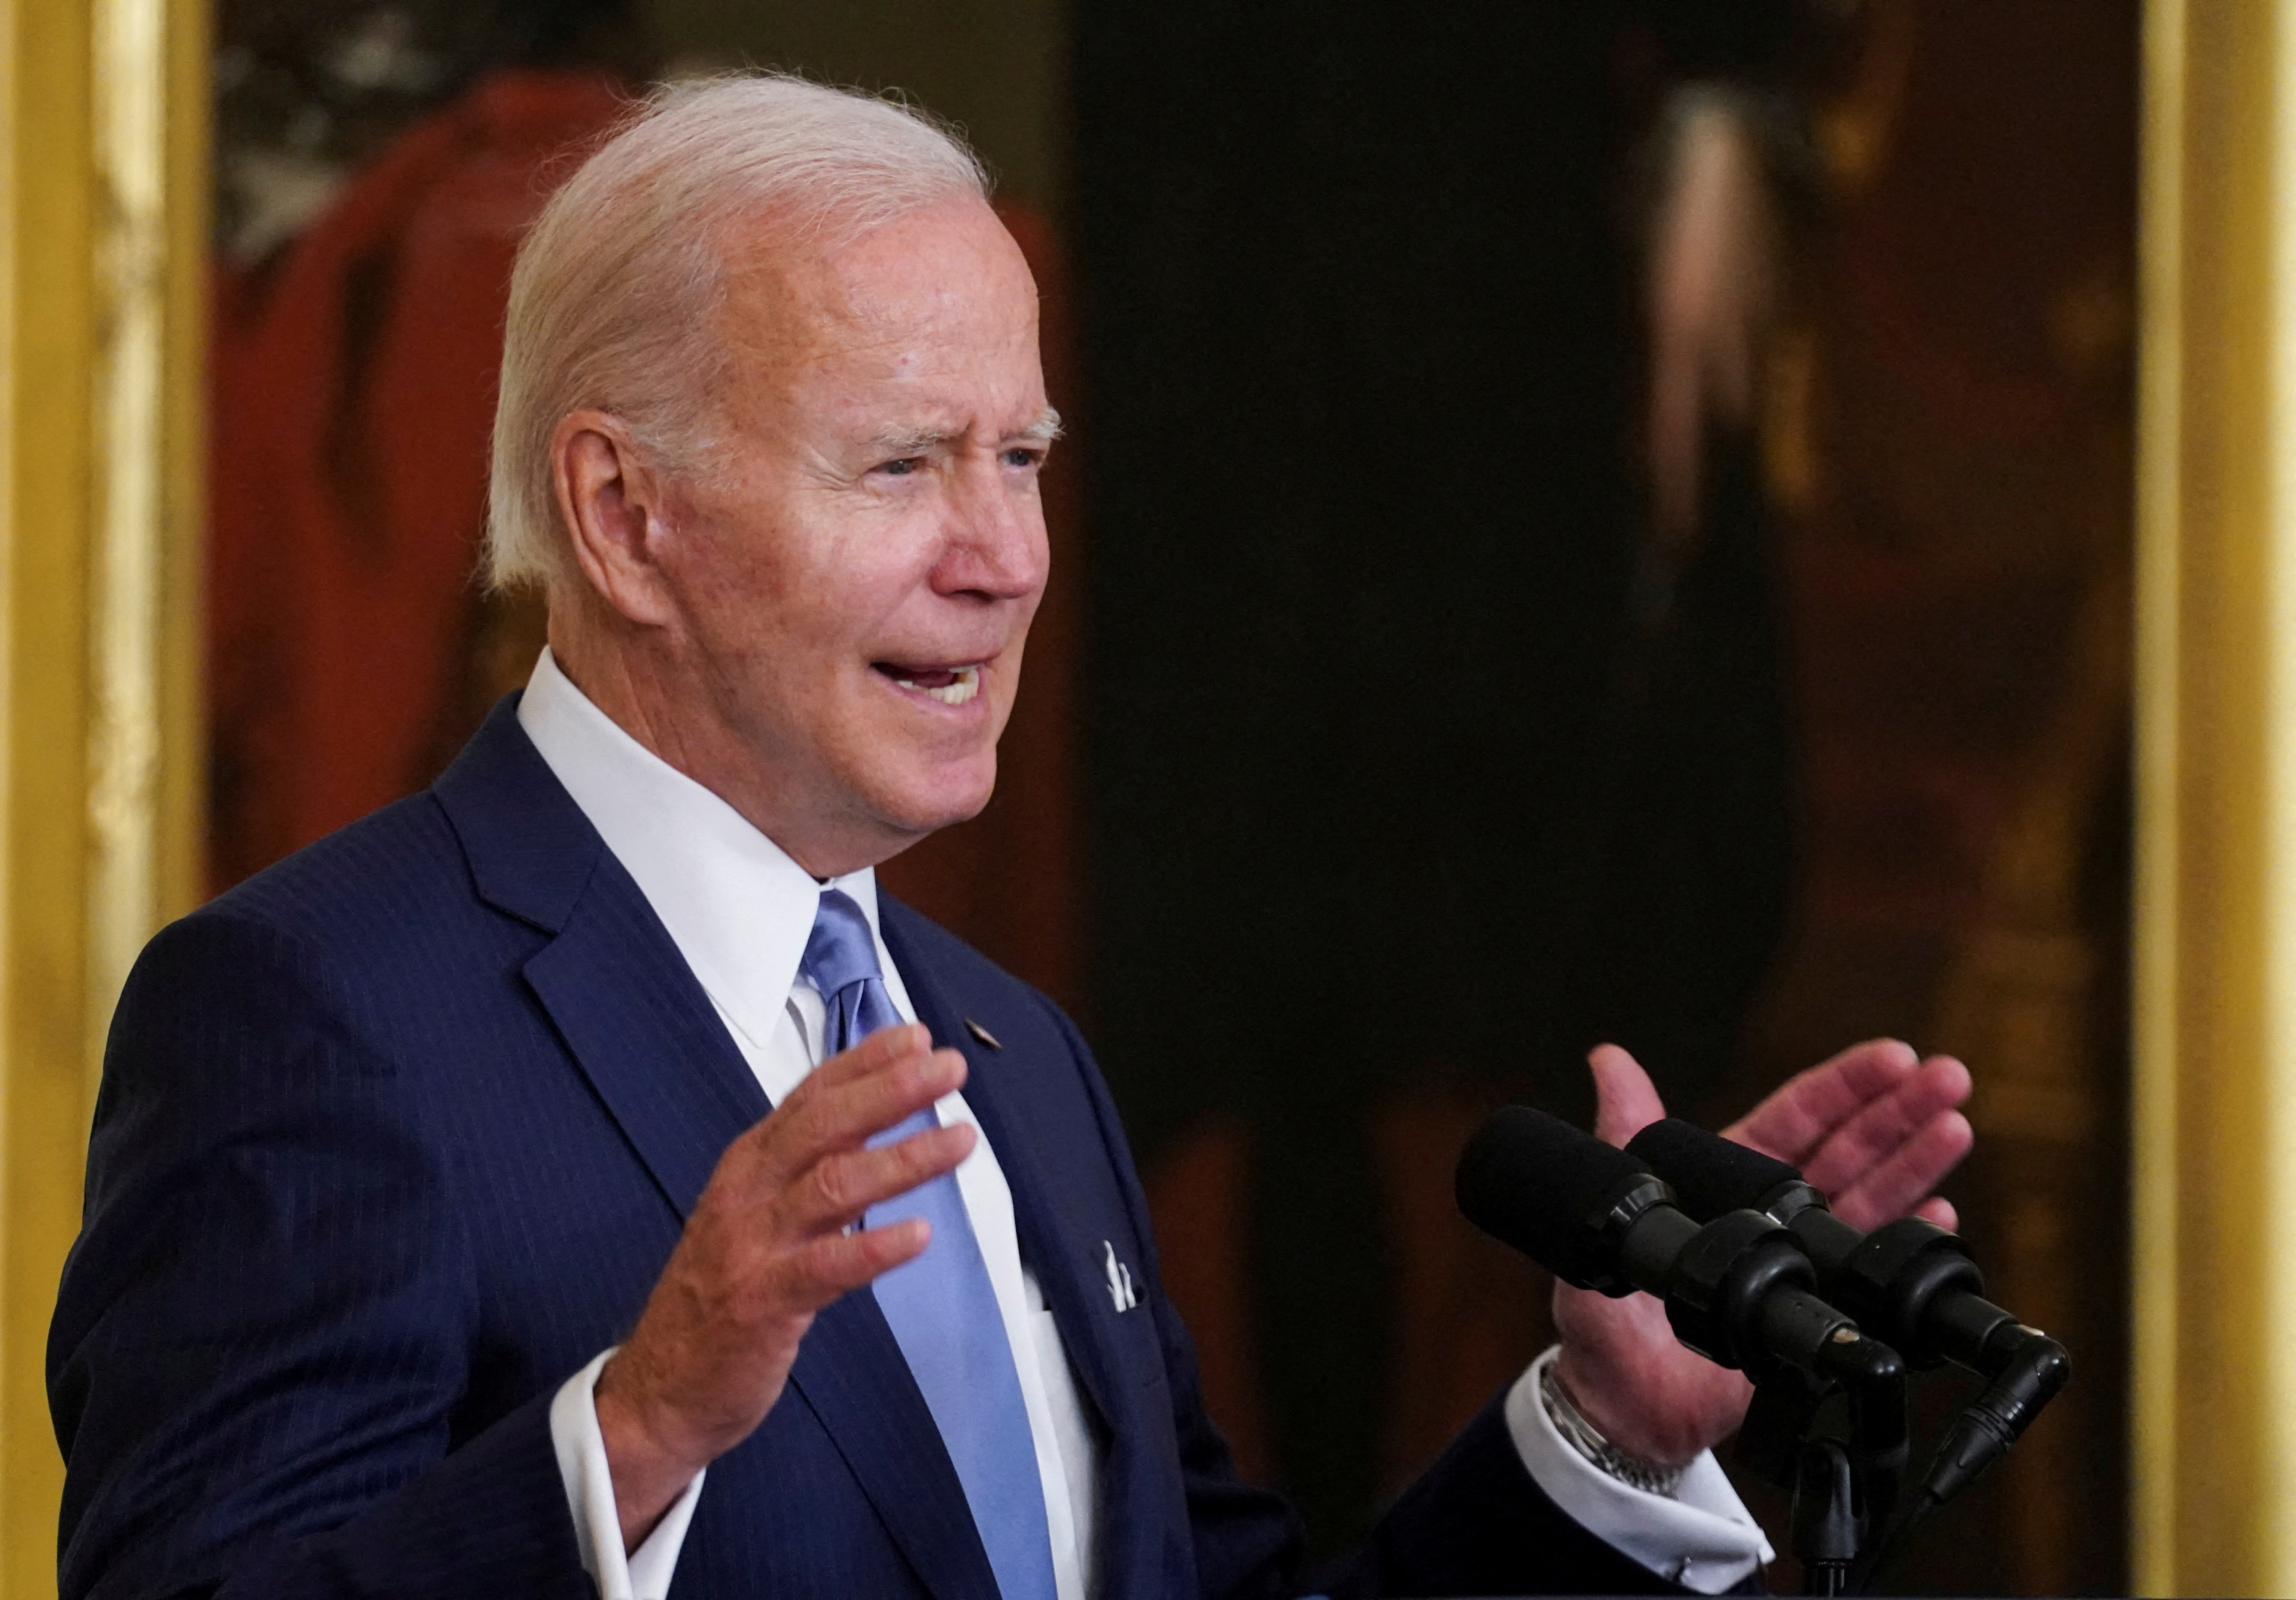 U.S. President Biden awards Medals of Honor to Vietnam War veterans during White House ceremony in Washington